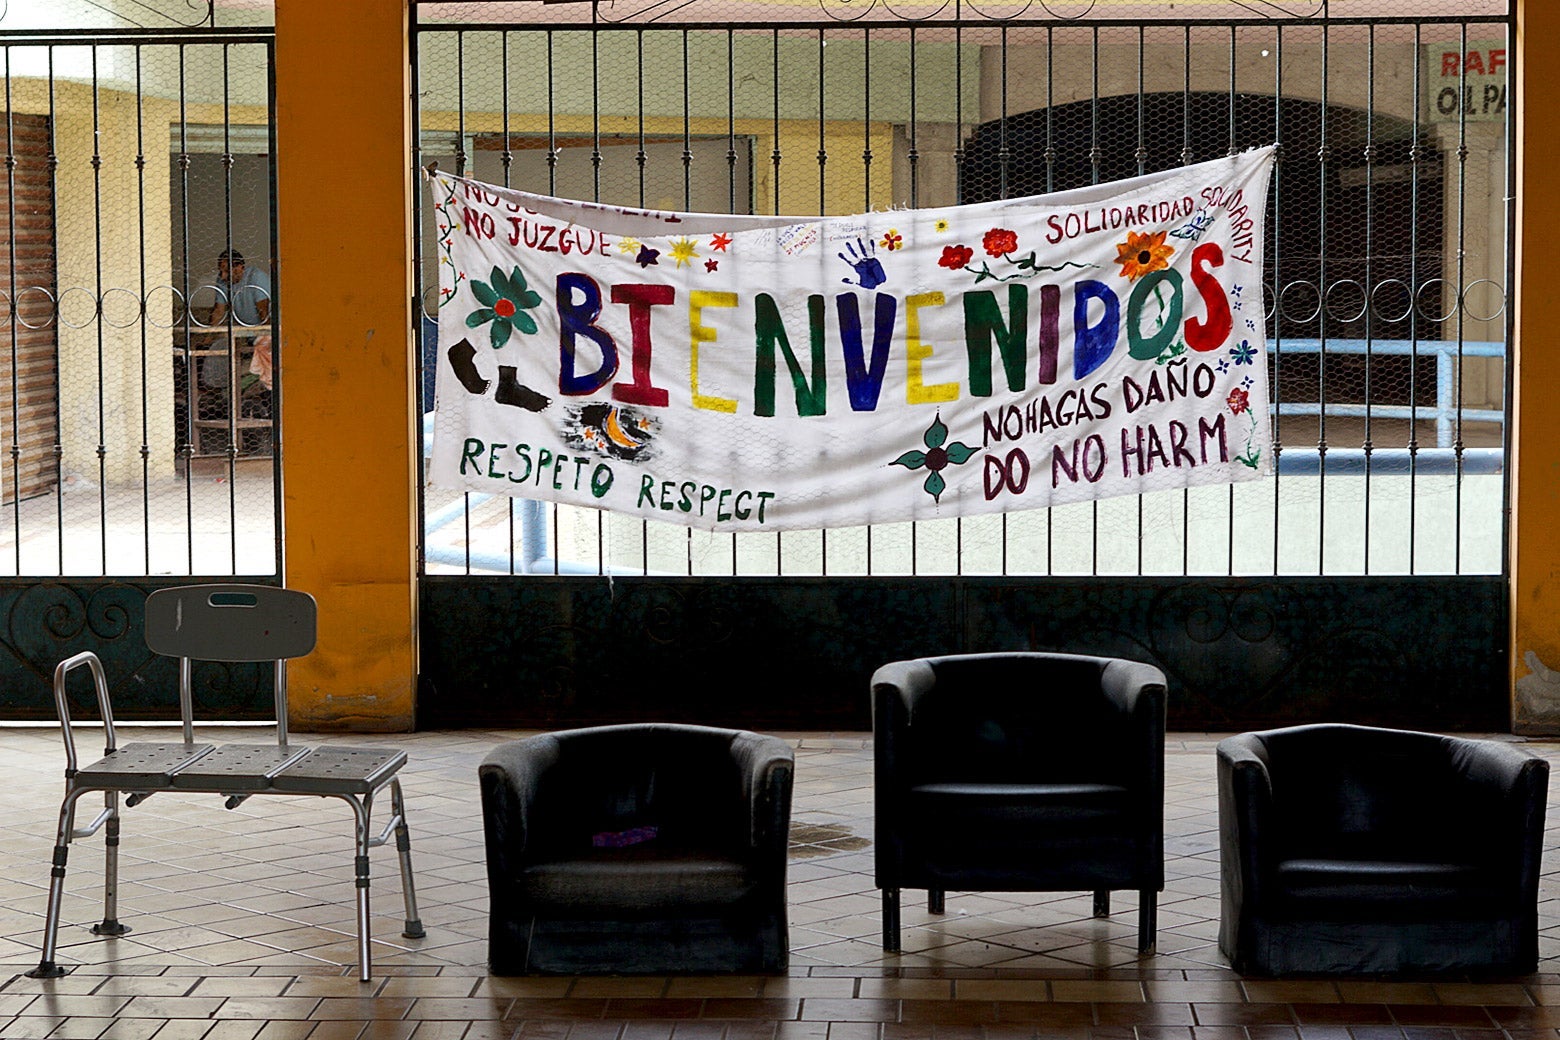 A hand-painted banner reads, "Bienvenidos."